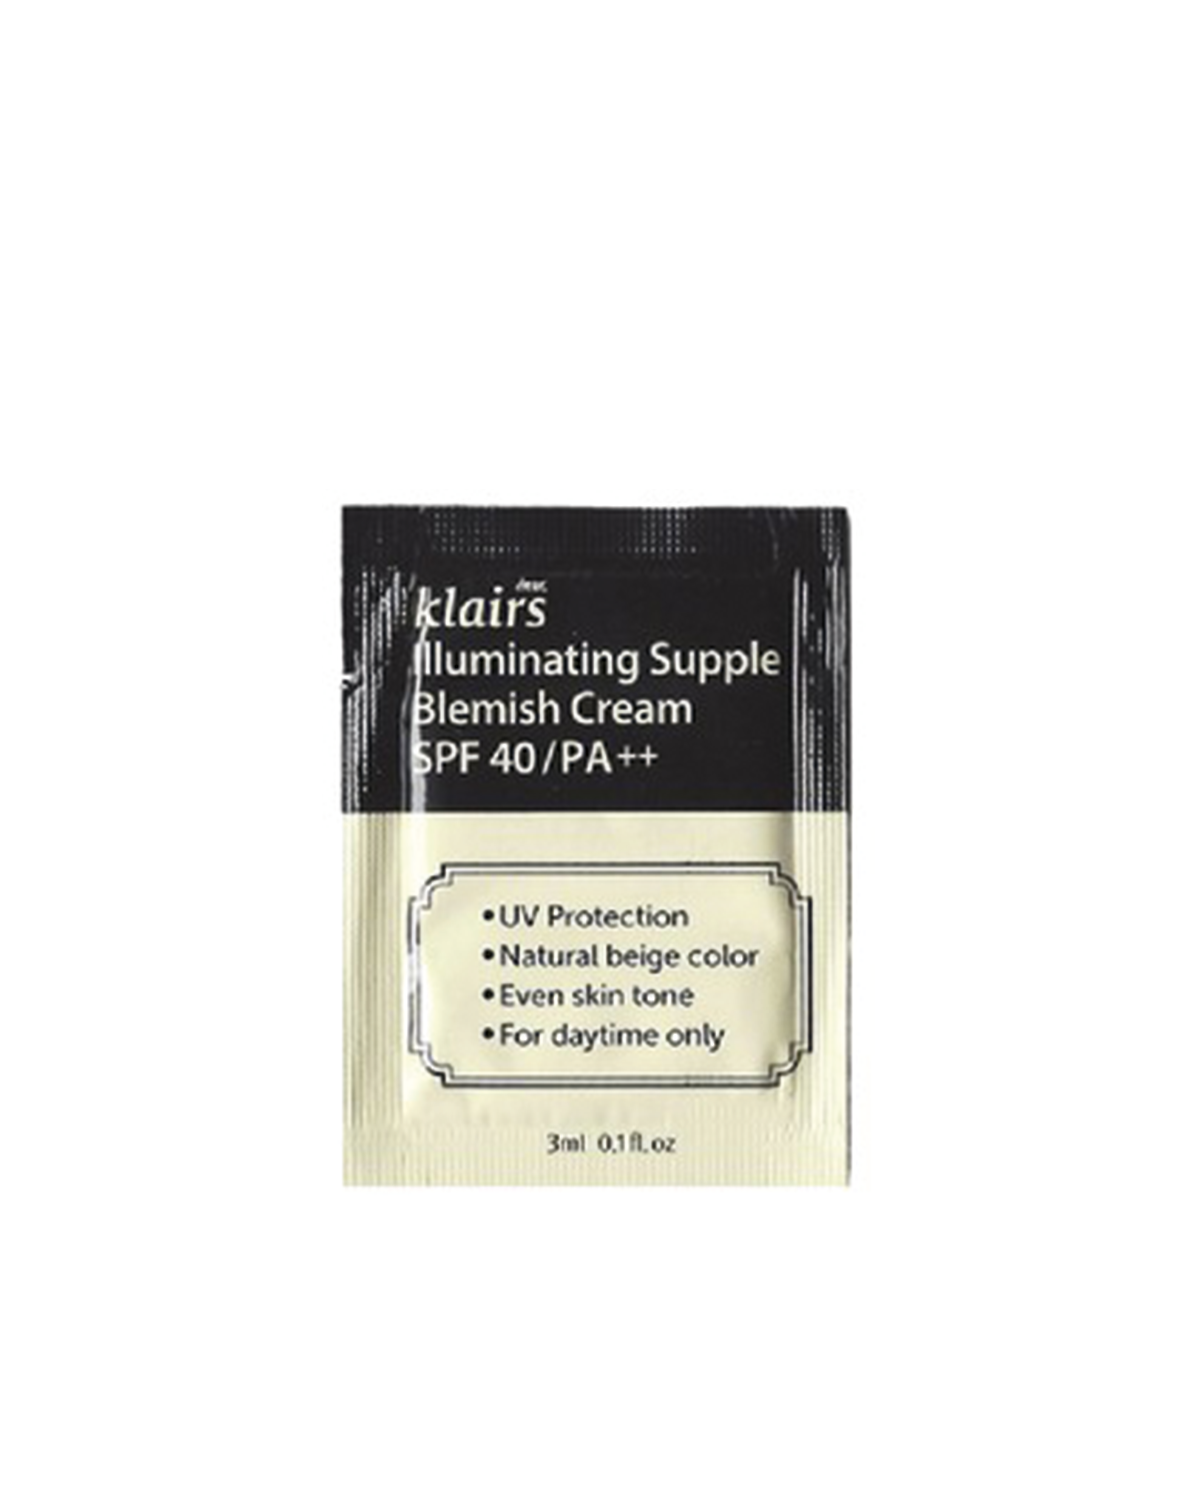 KLAIRS Illuminating Supple Blemish Cream SPF40 PA++ Sample 3 ml